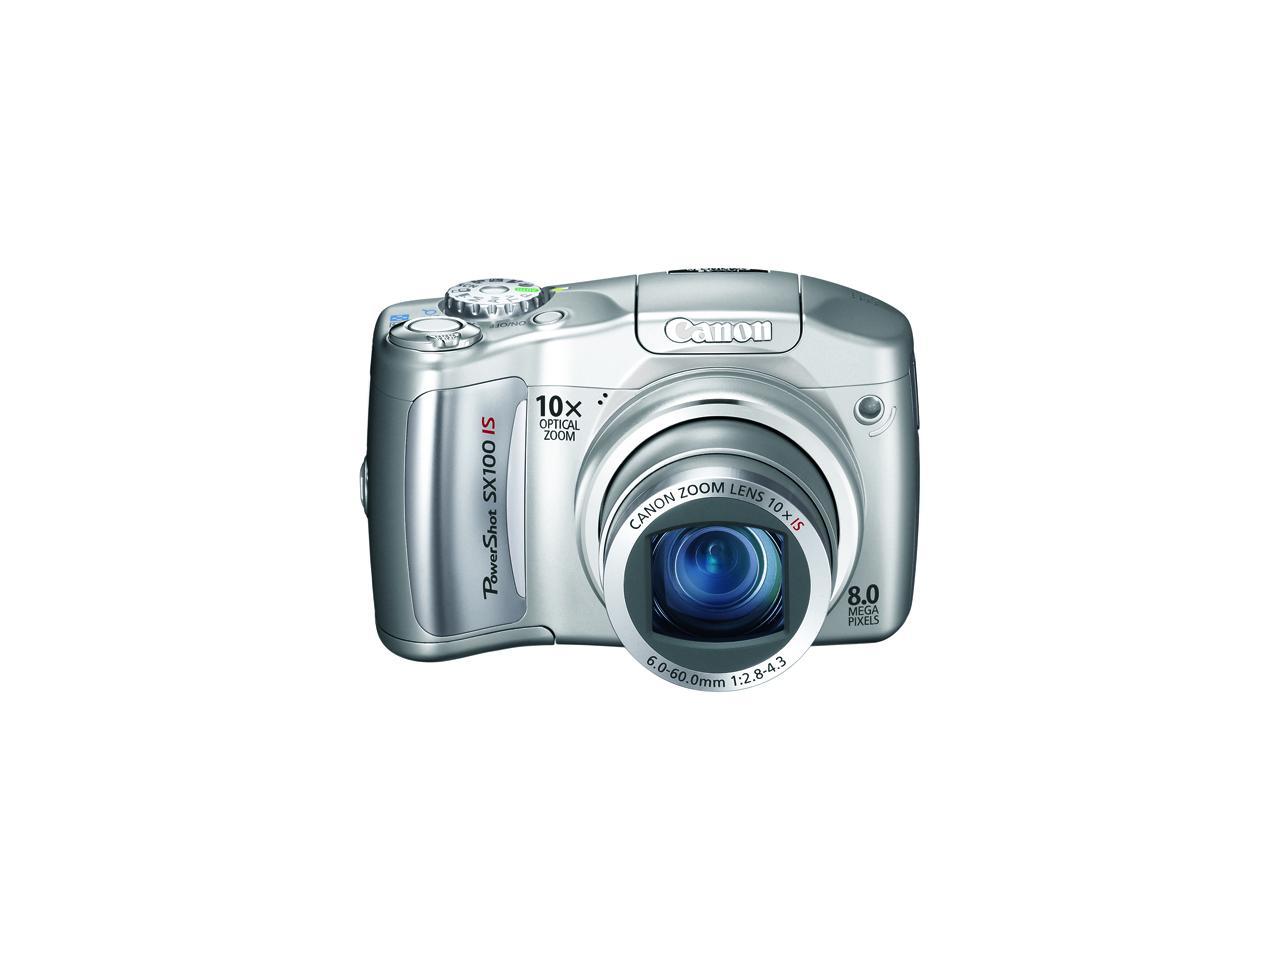 Overwegen Caroline Opgetild Canon PowerShot SX100 IS Silver 8.0 MP Digital Camera - Newegg.com